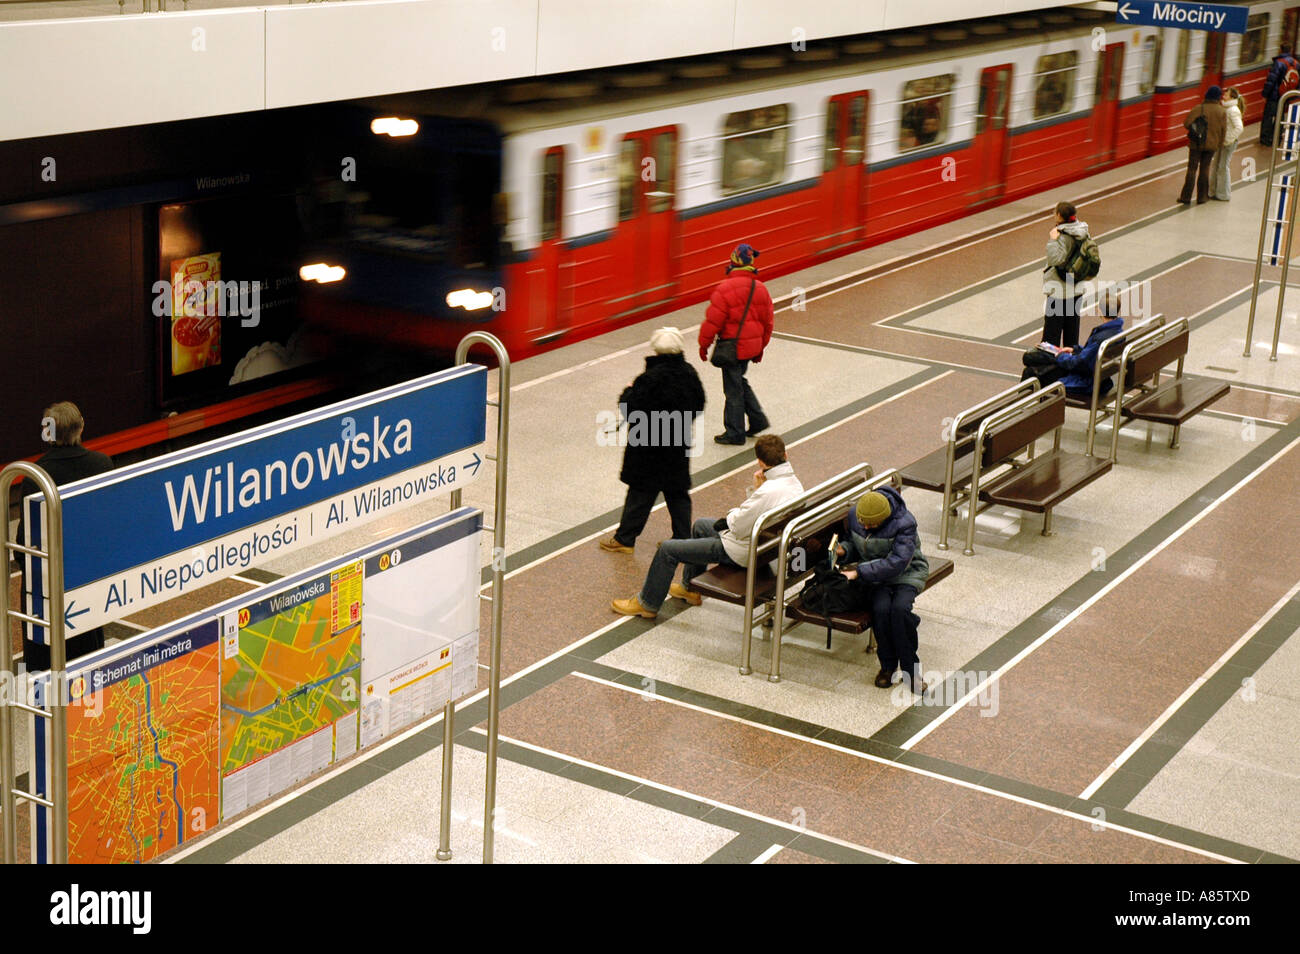 Wilanowska underground station in Warsaw Poland Stock Photo